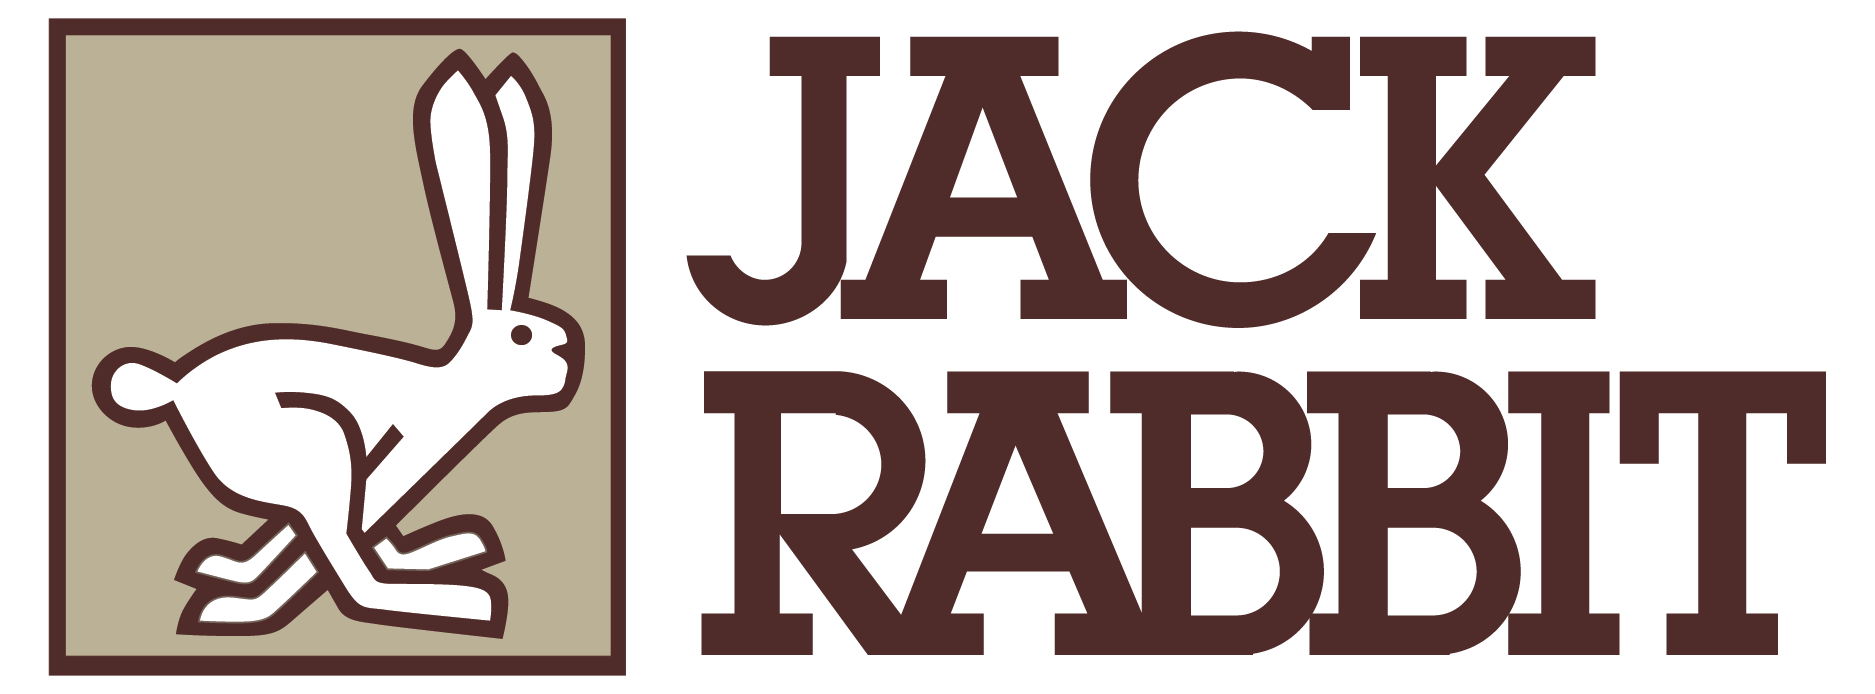 Jack Rabbit Logo - Jackrabbit Equipment – Harvest Equipment Elevators Chippers ...